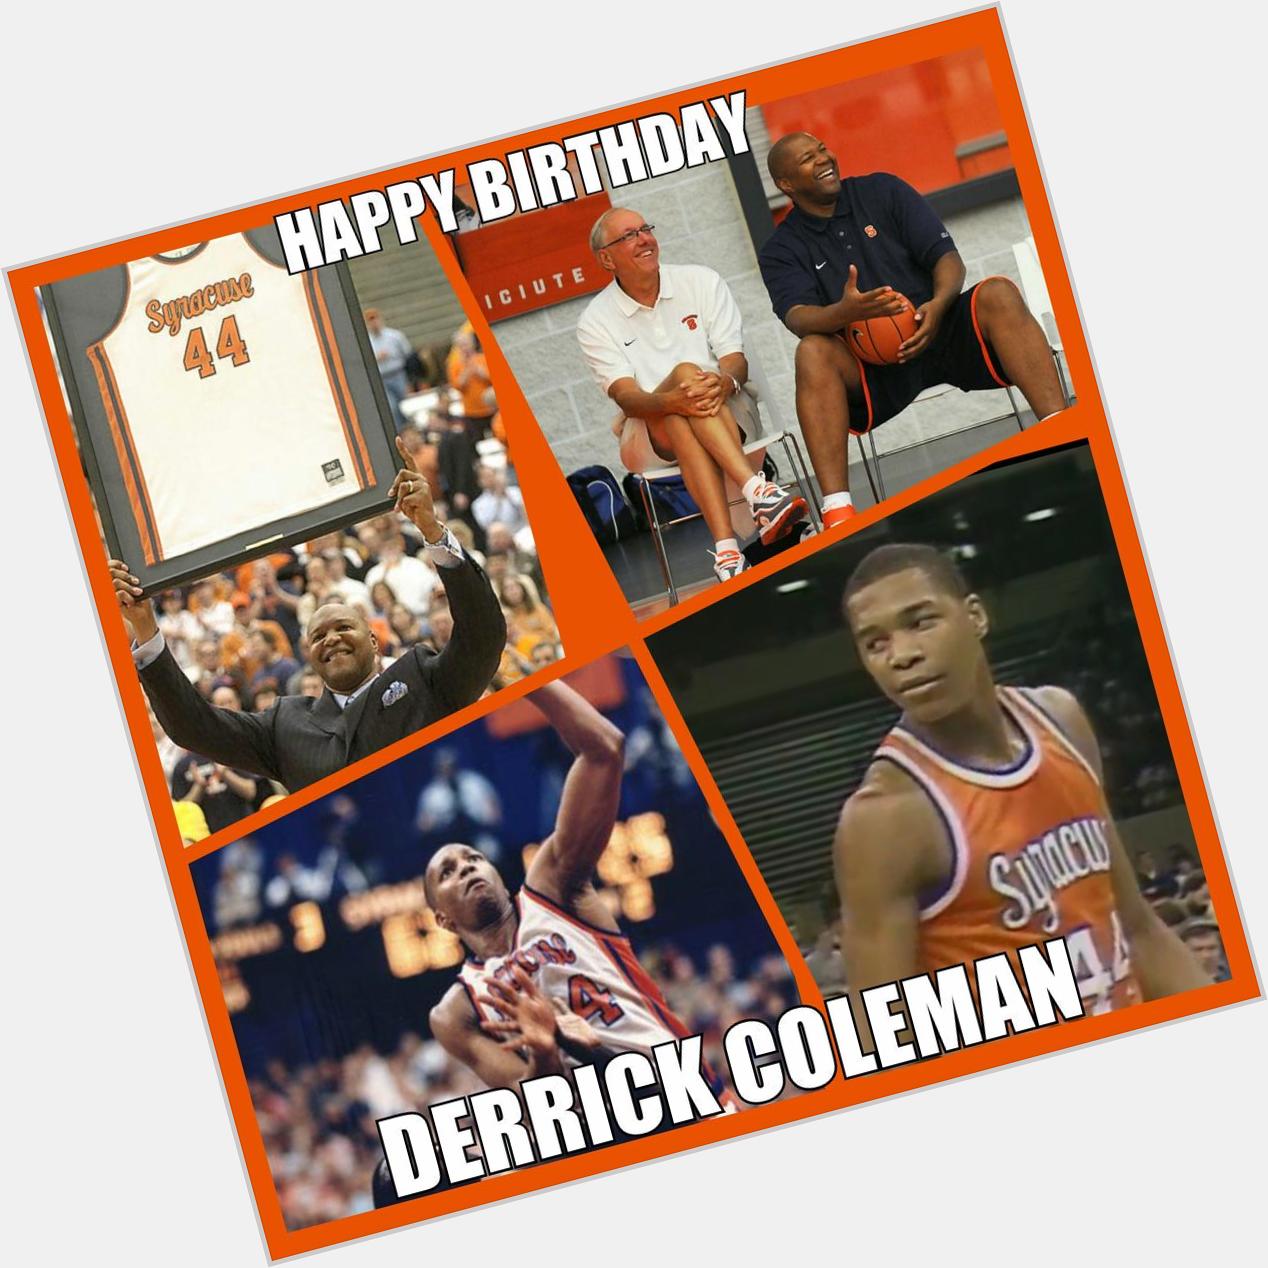 Wishing A Very Happy Birthday to Derrick Coleman! 